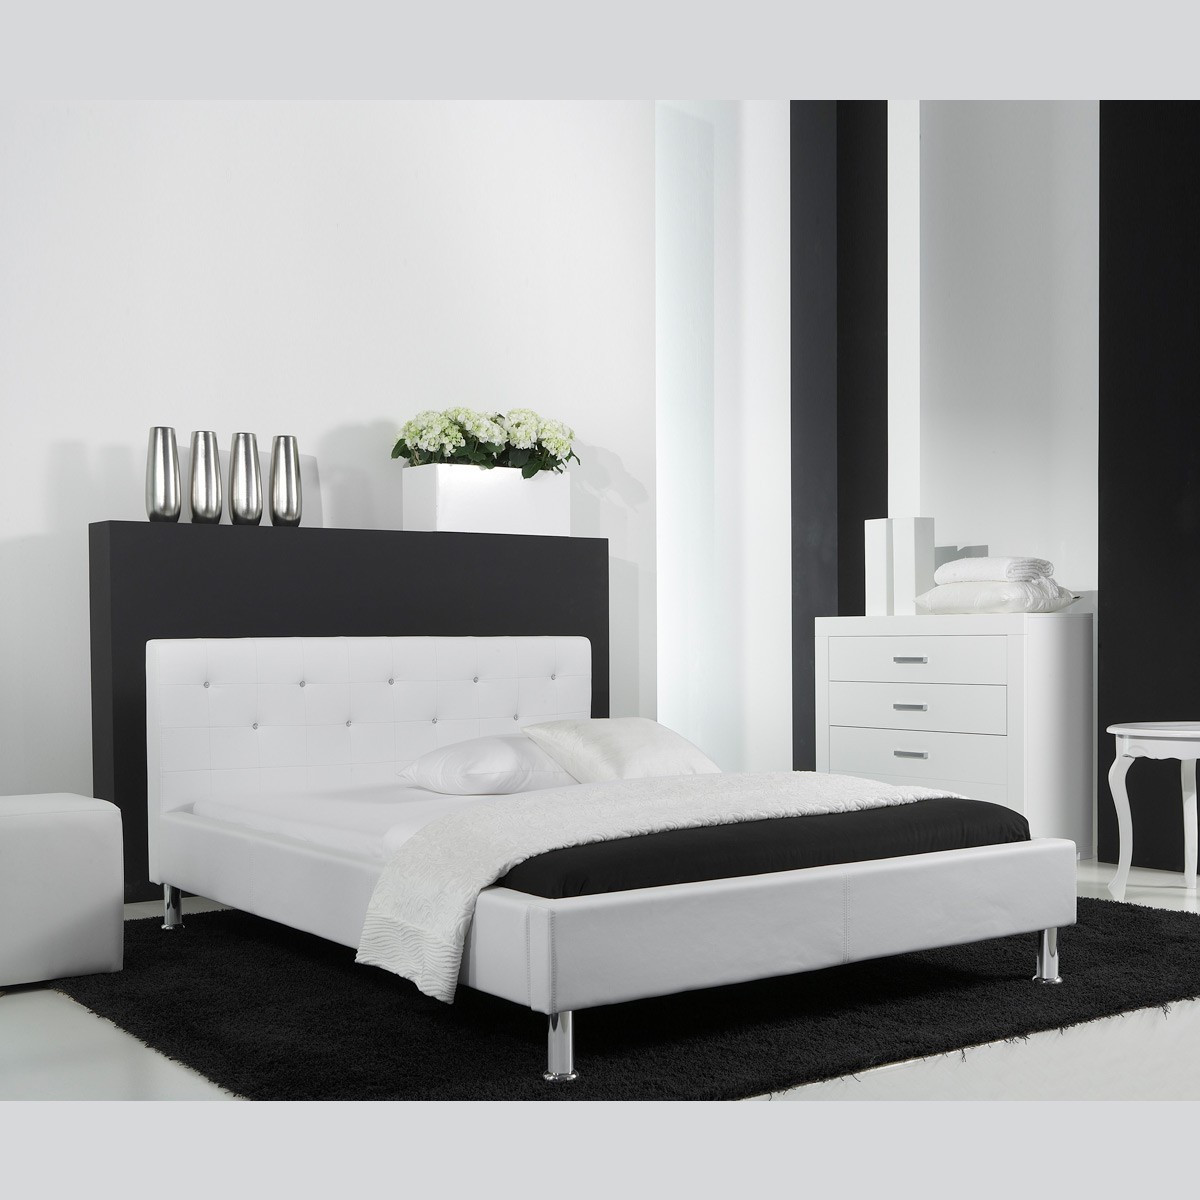 Polsterbett 140x200
 Polsterbett Kunstlederbett Bett 140x200 in Weiß mit